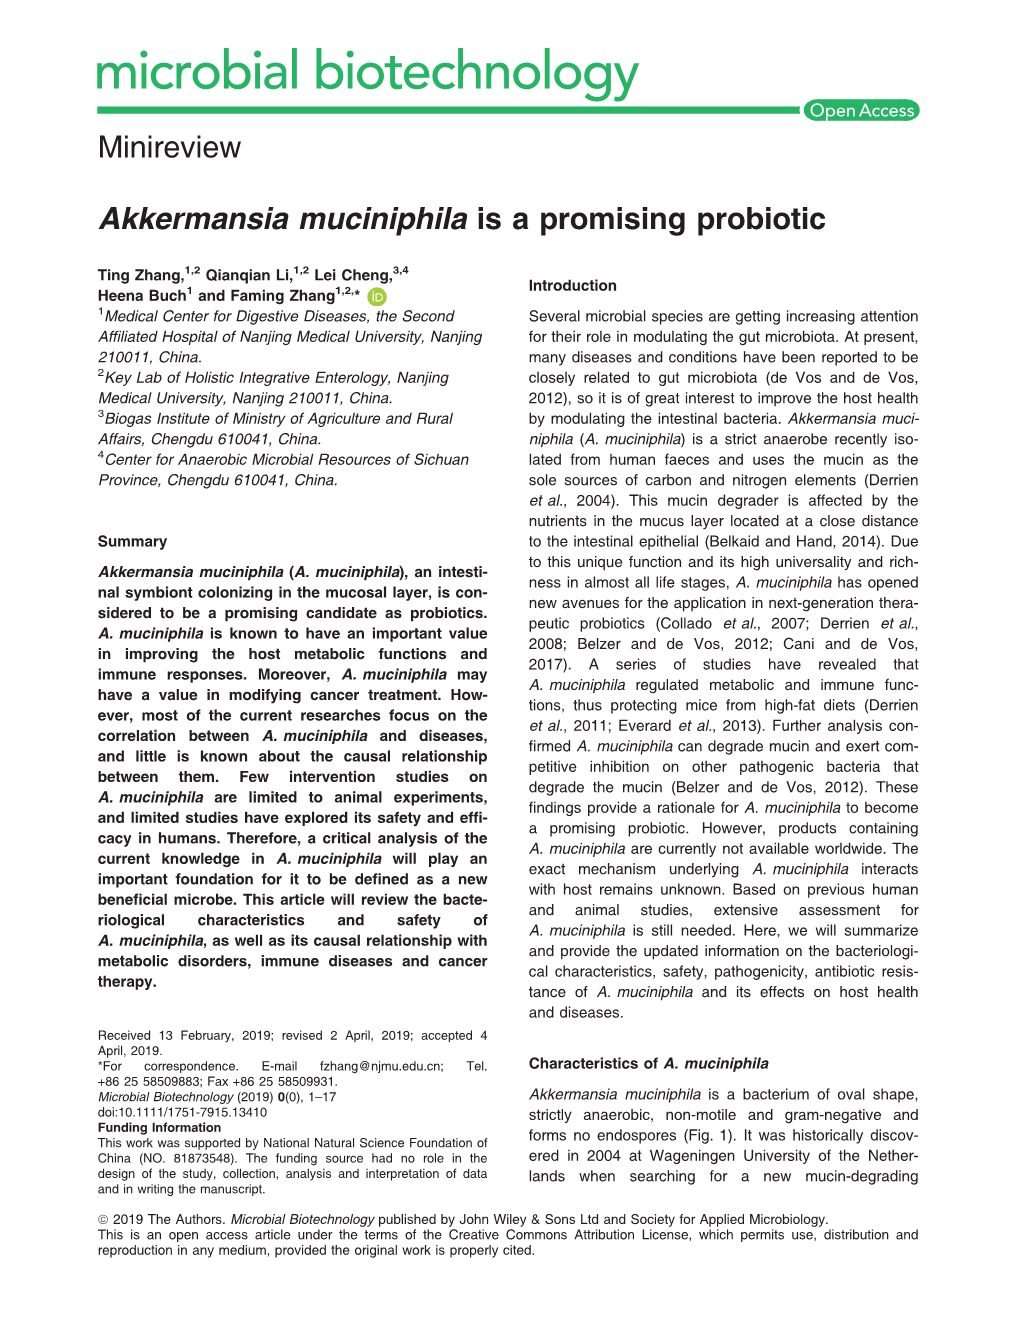 Akkermansia Muciniphila Is a Promising Probiotic